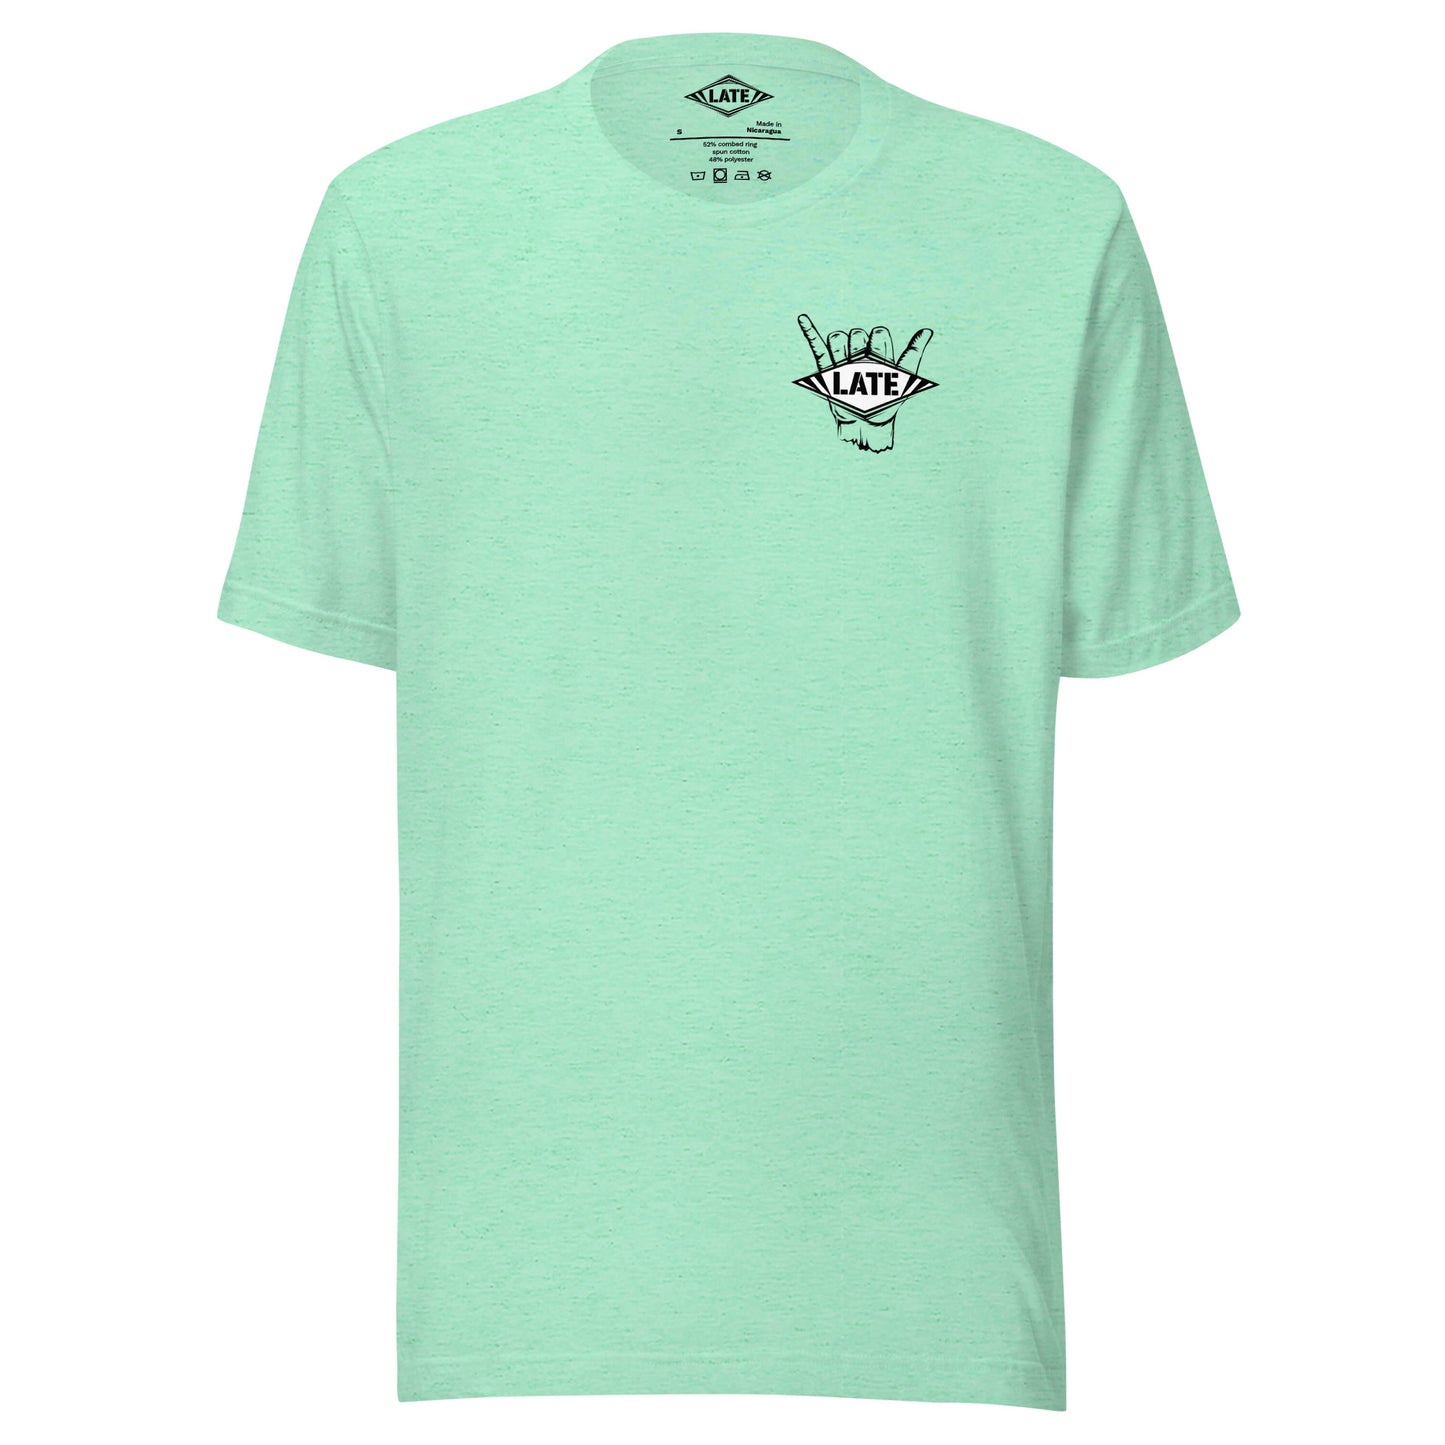 T-Shirt surfing main shaka avec le logo Late face avant t-shirt unisex couleur vert menthe